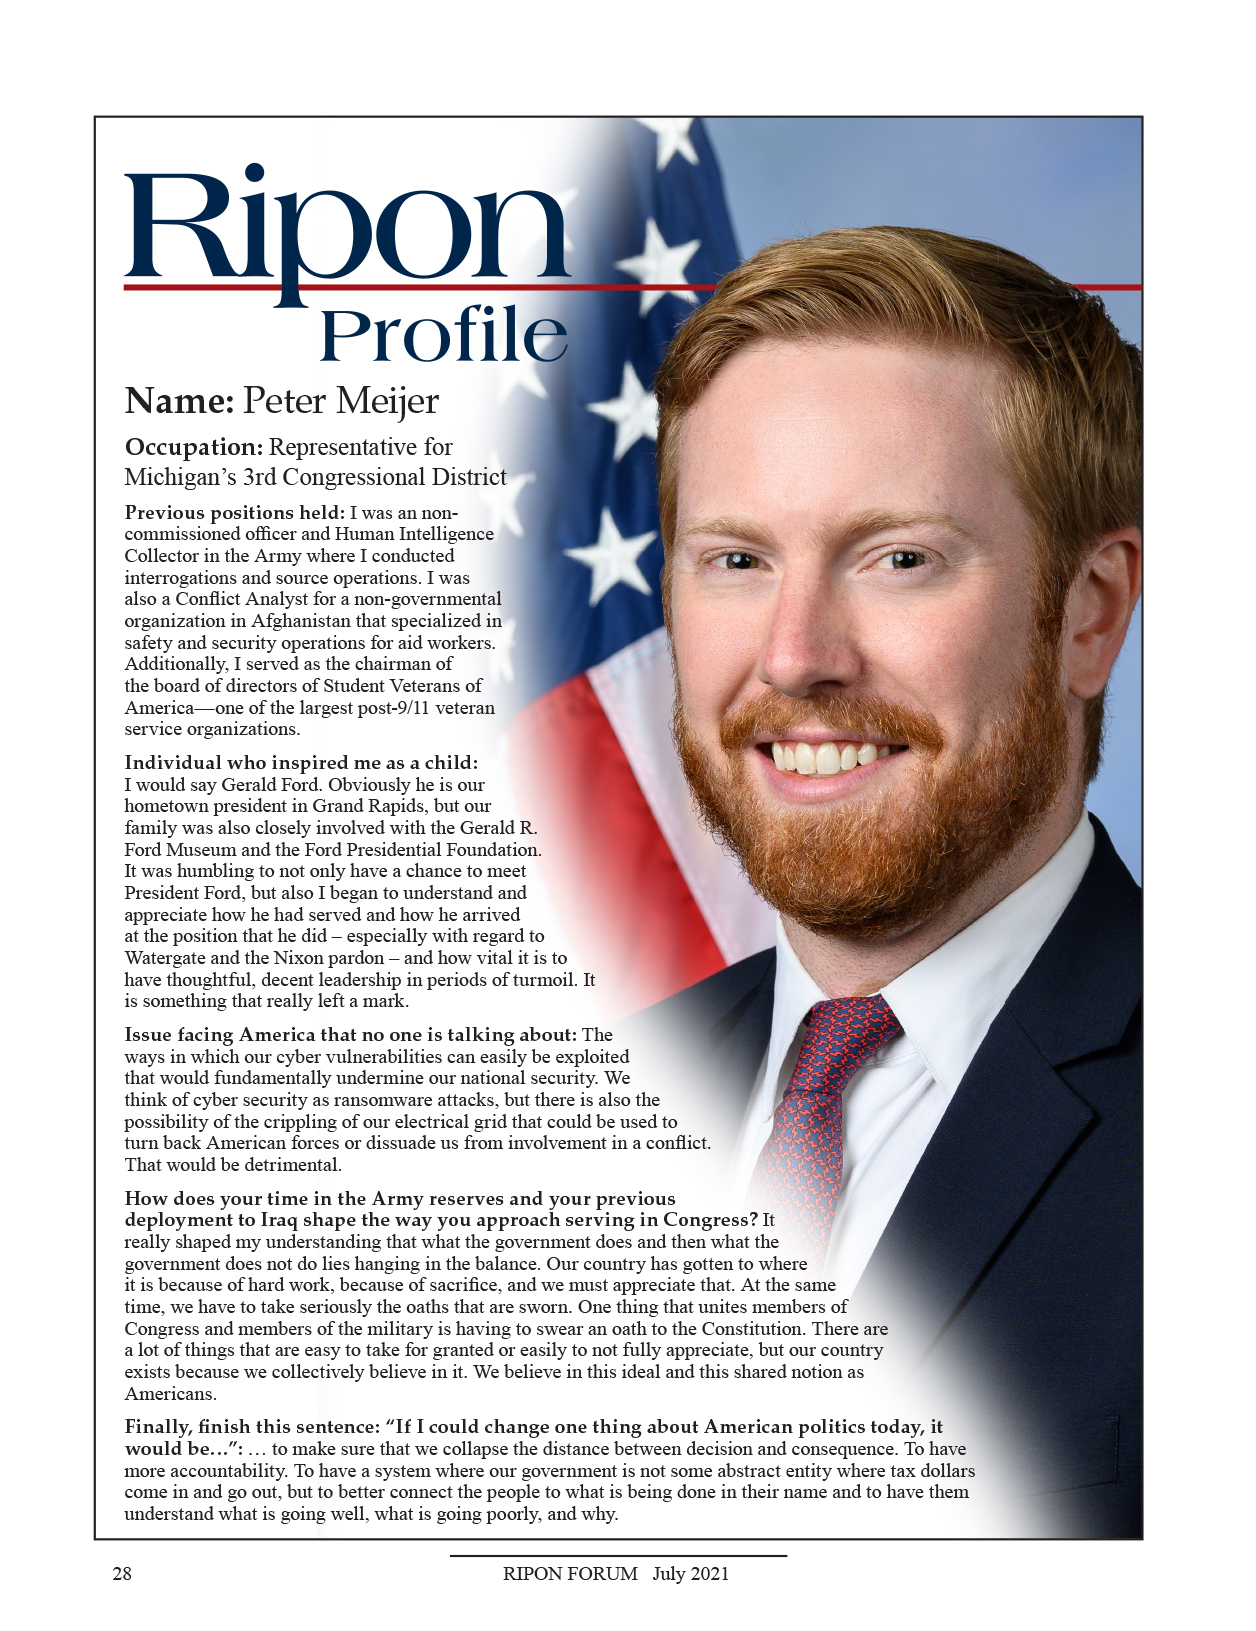 Ripon Profile of Peter Meijer